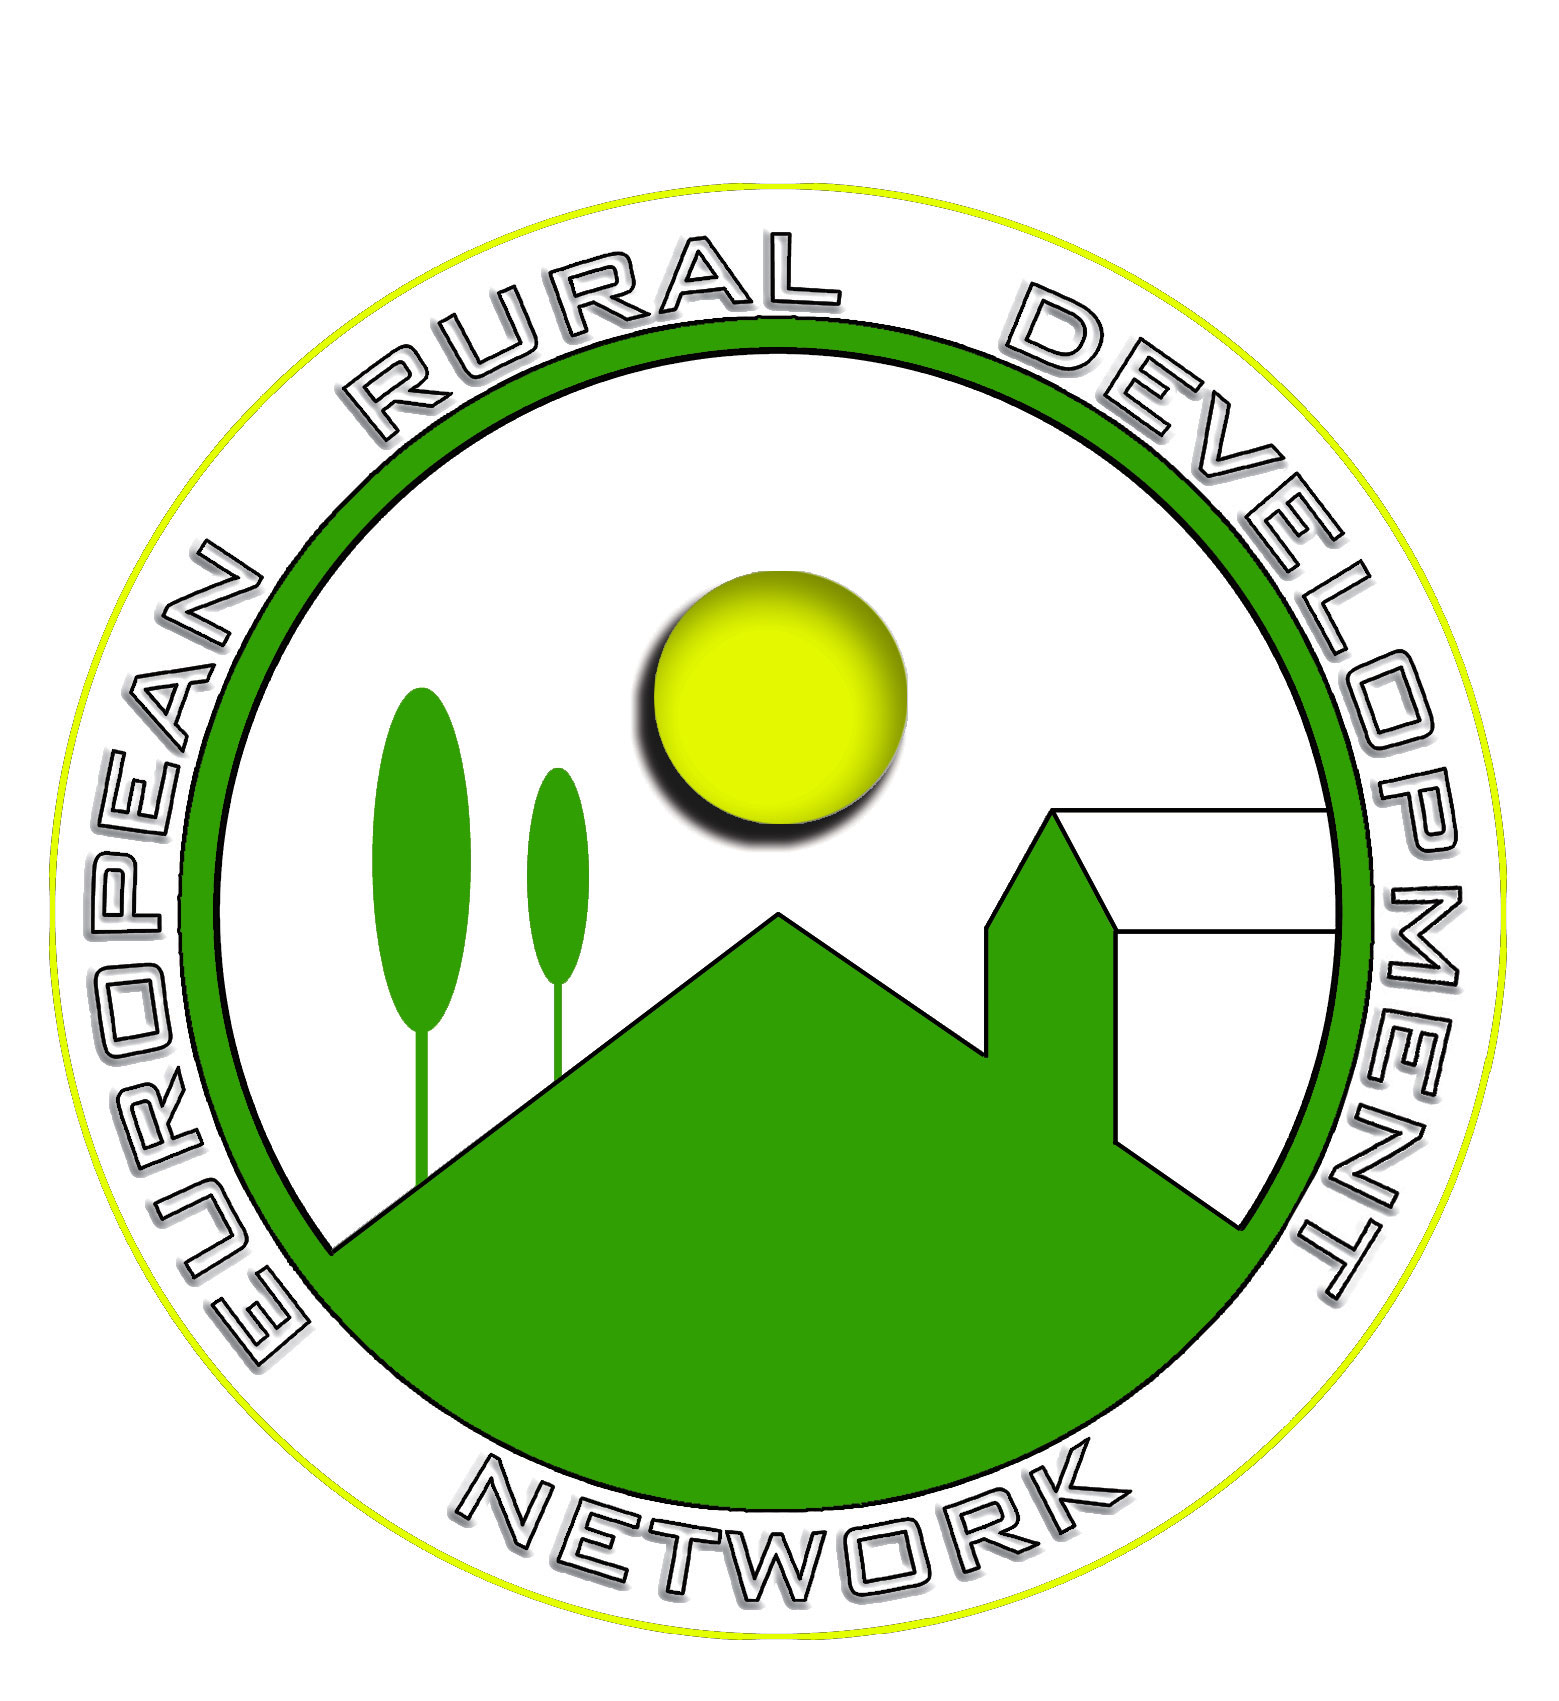 European Rural Development Network